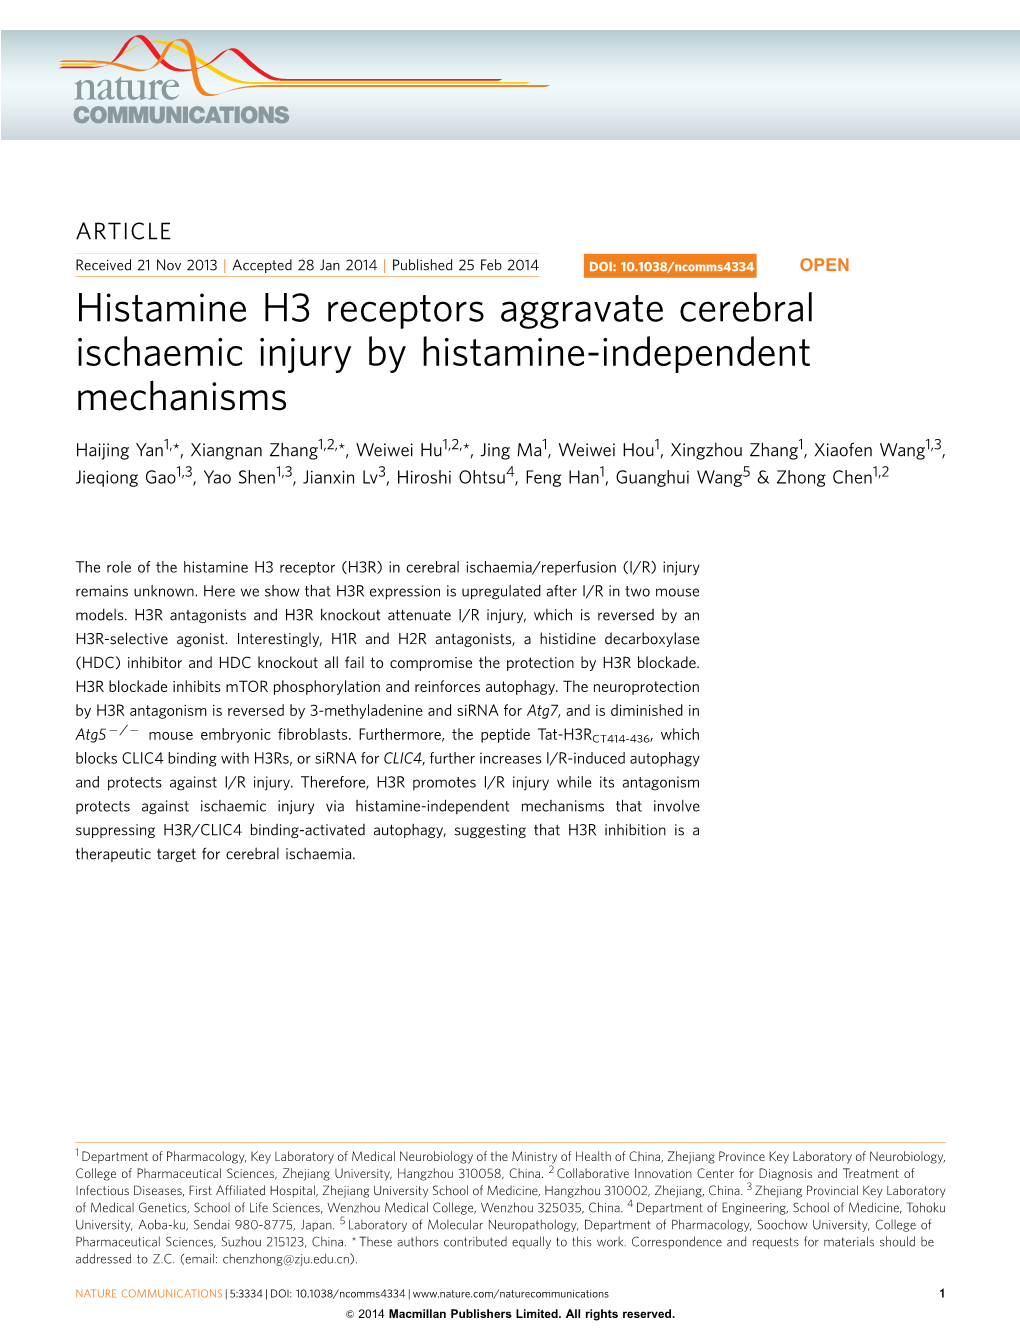 Histamine H3 Receptors Aggravate Cerebral Ischaemic Injury by Histamine-Independent Mechanisms